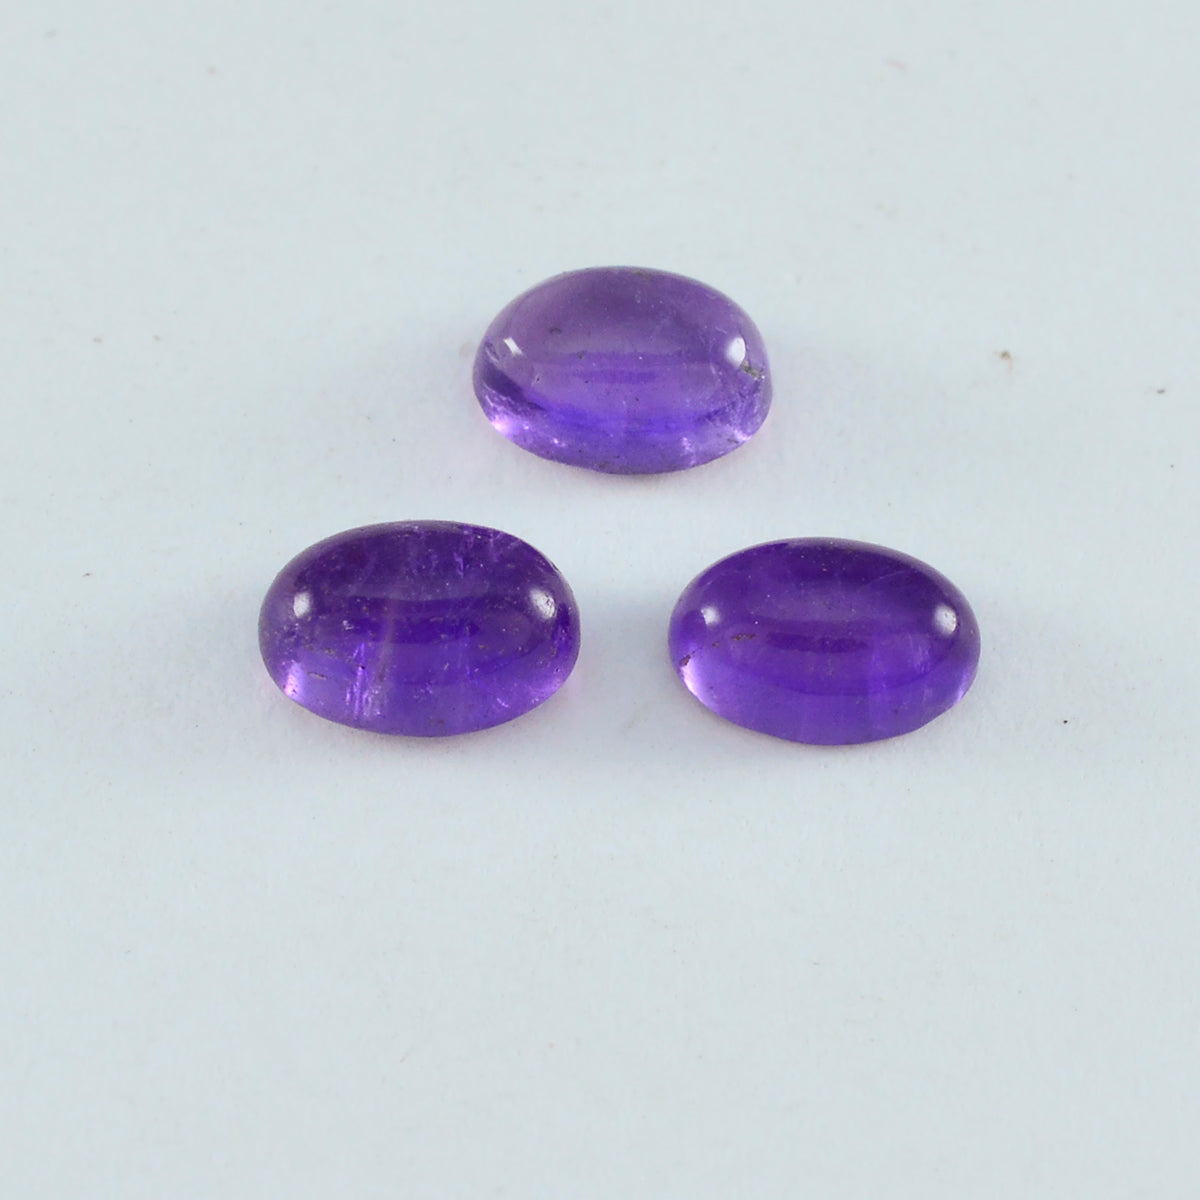 Riyogems 1 Stück lila Amethyst-Cabochon, 6 x 8 mm, ovale Form, wunderschöner, hochwertiger, loser Edelstein